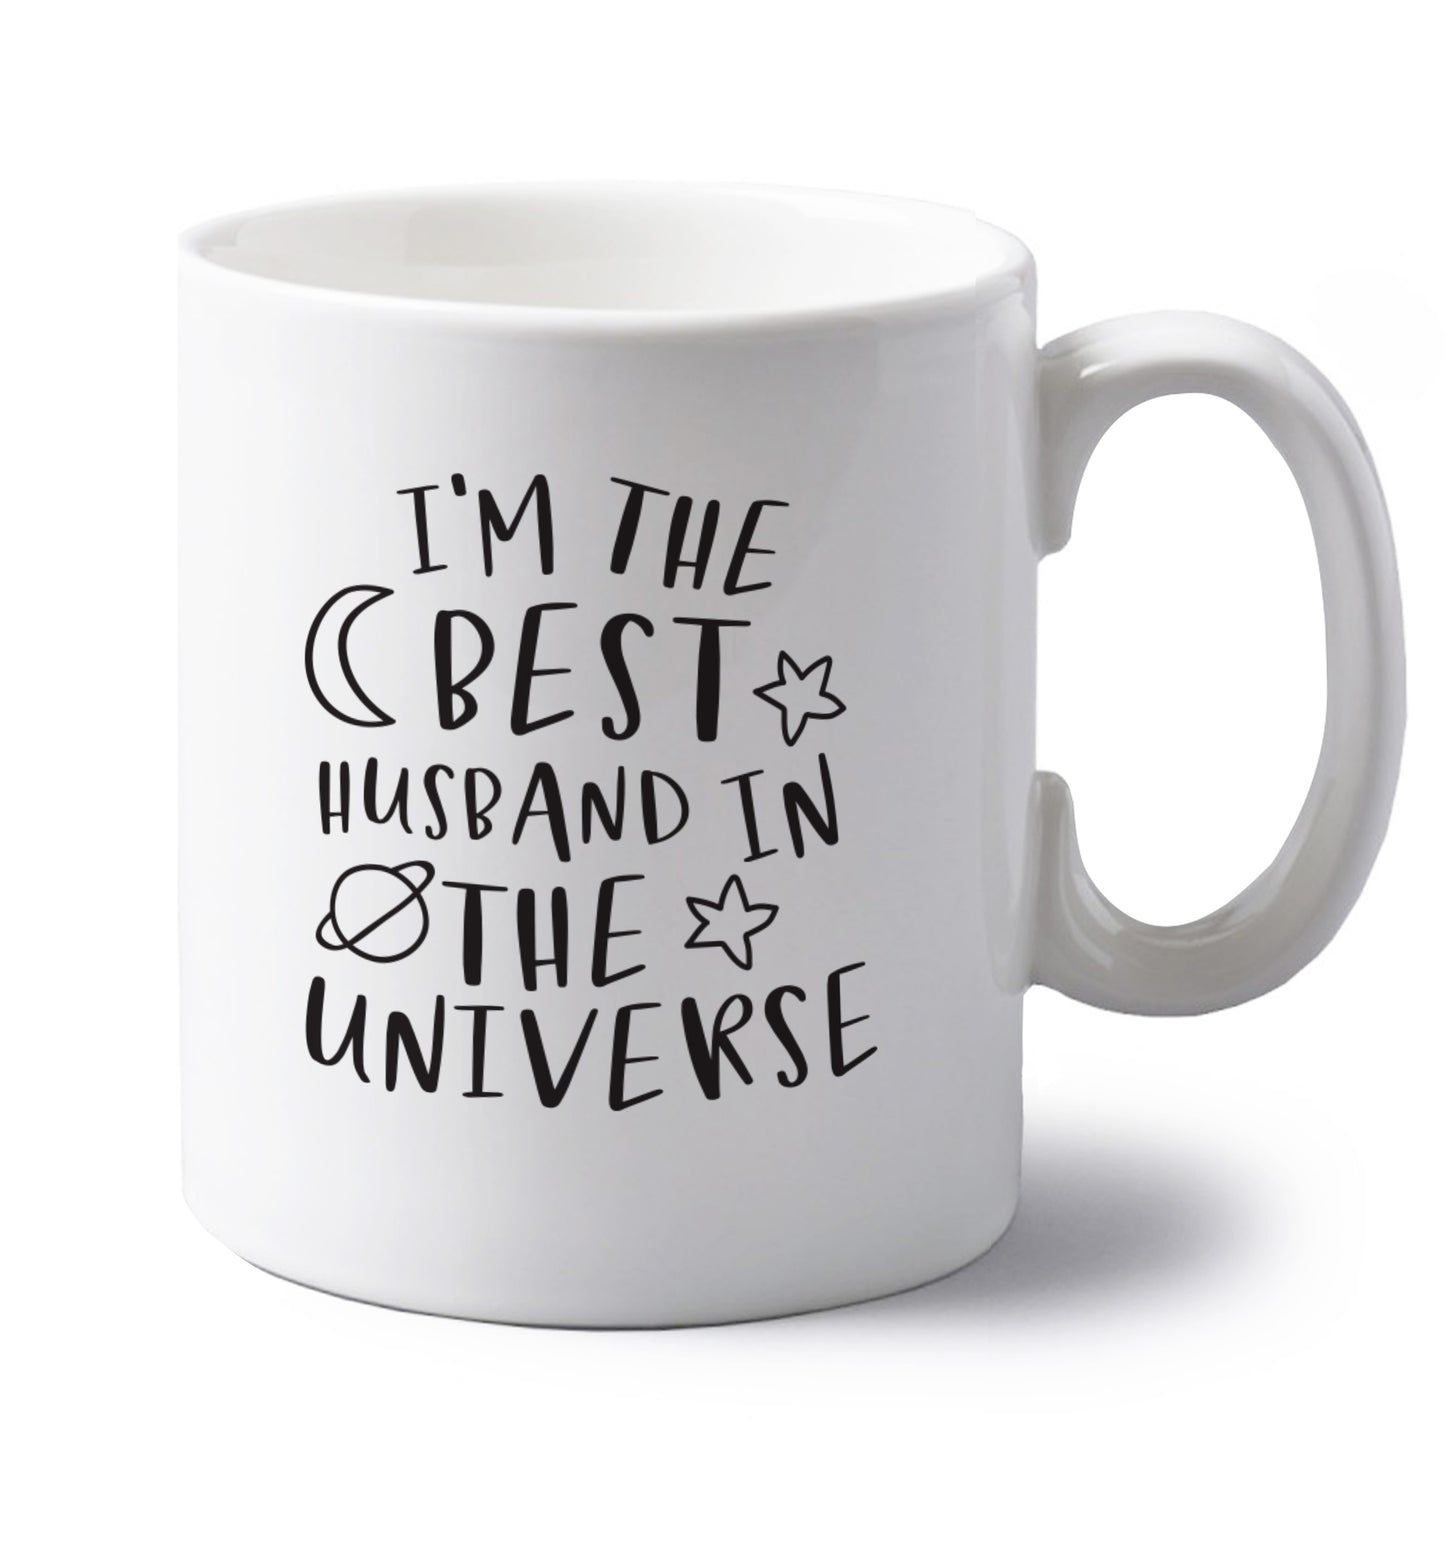 I'm the best husband in the universe left handed white ceramic mug 